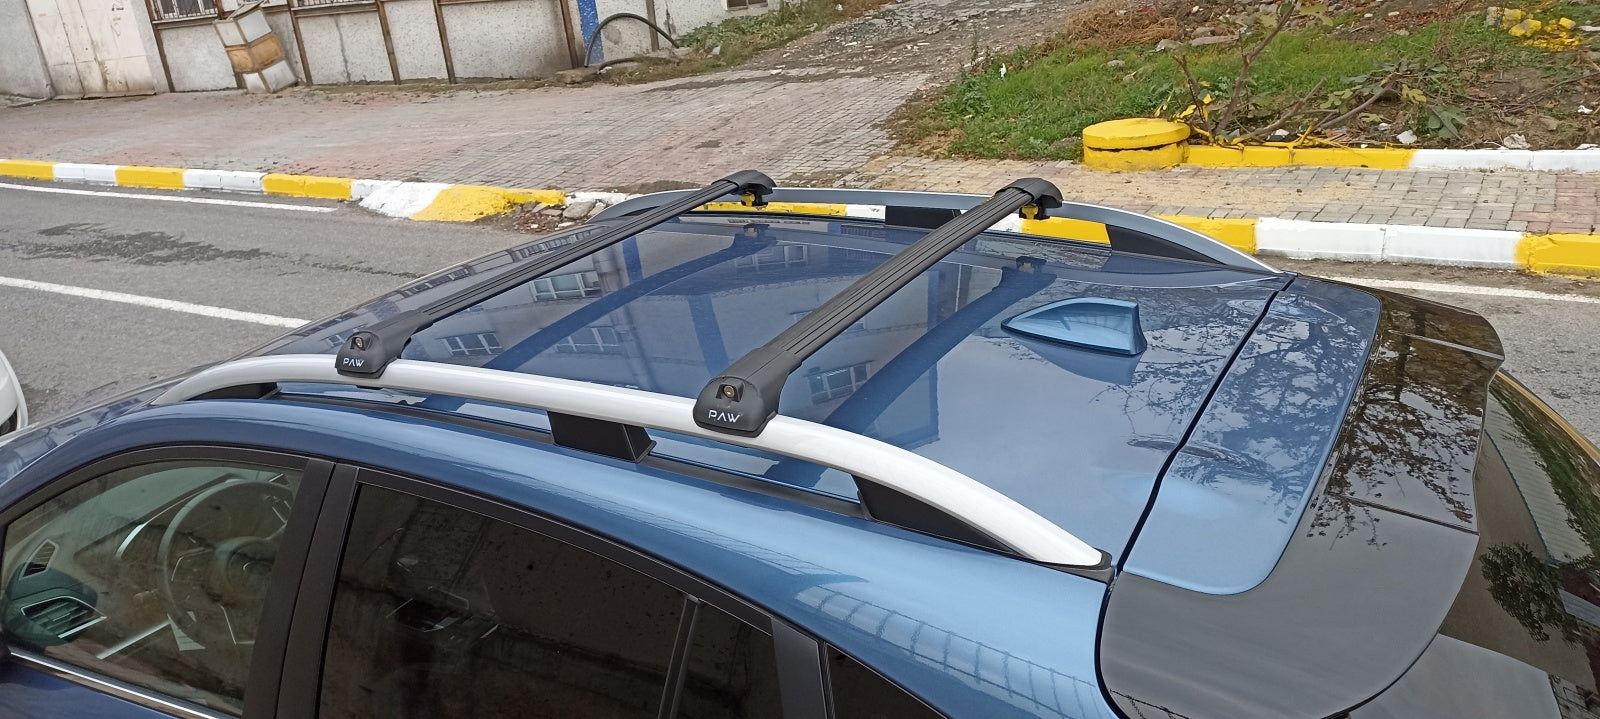 For Dacia Sandero Stepway 2013-Up Roof Rack System, Aluminium Cross Bar, Metal Bracket, Lockable, Black